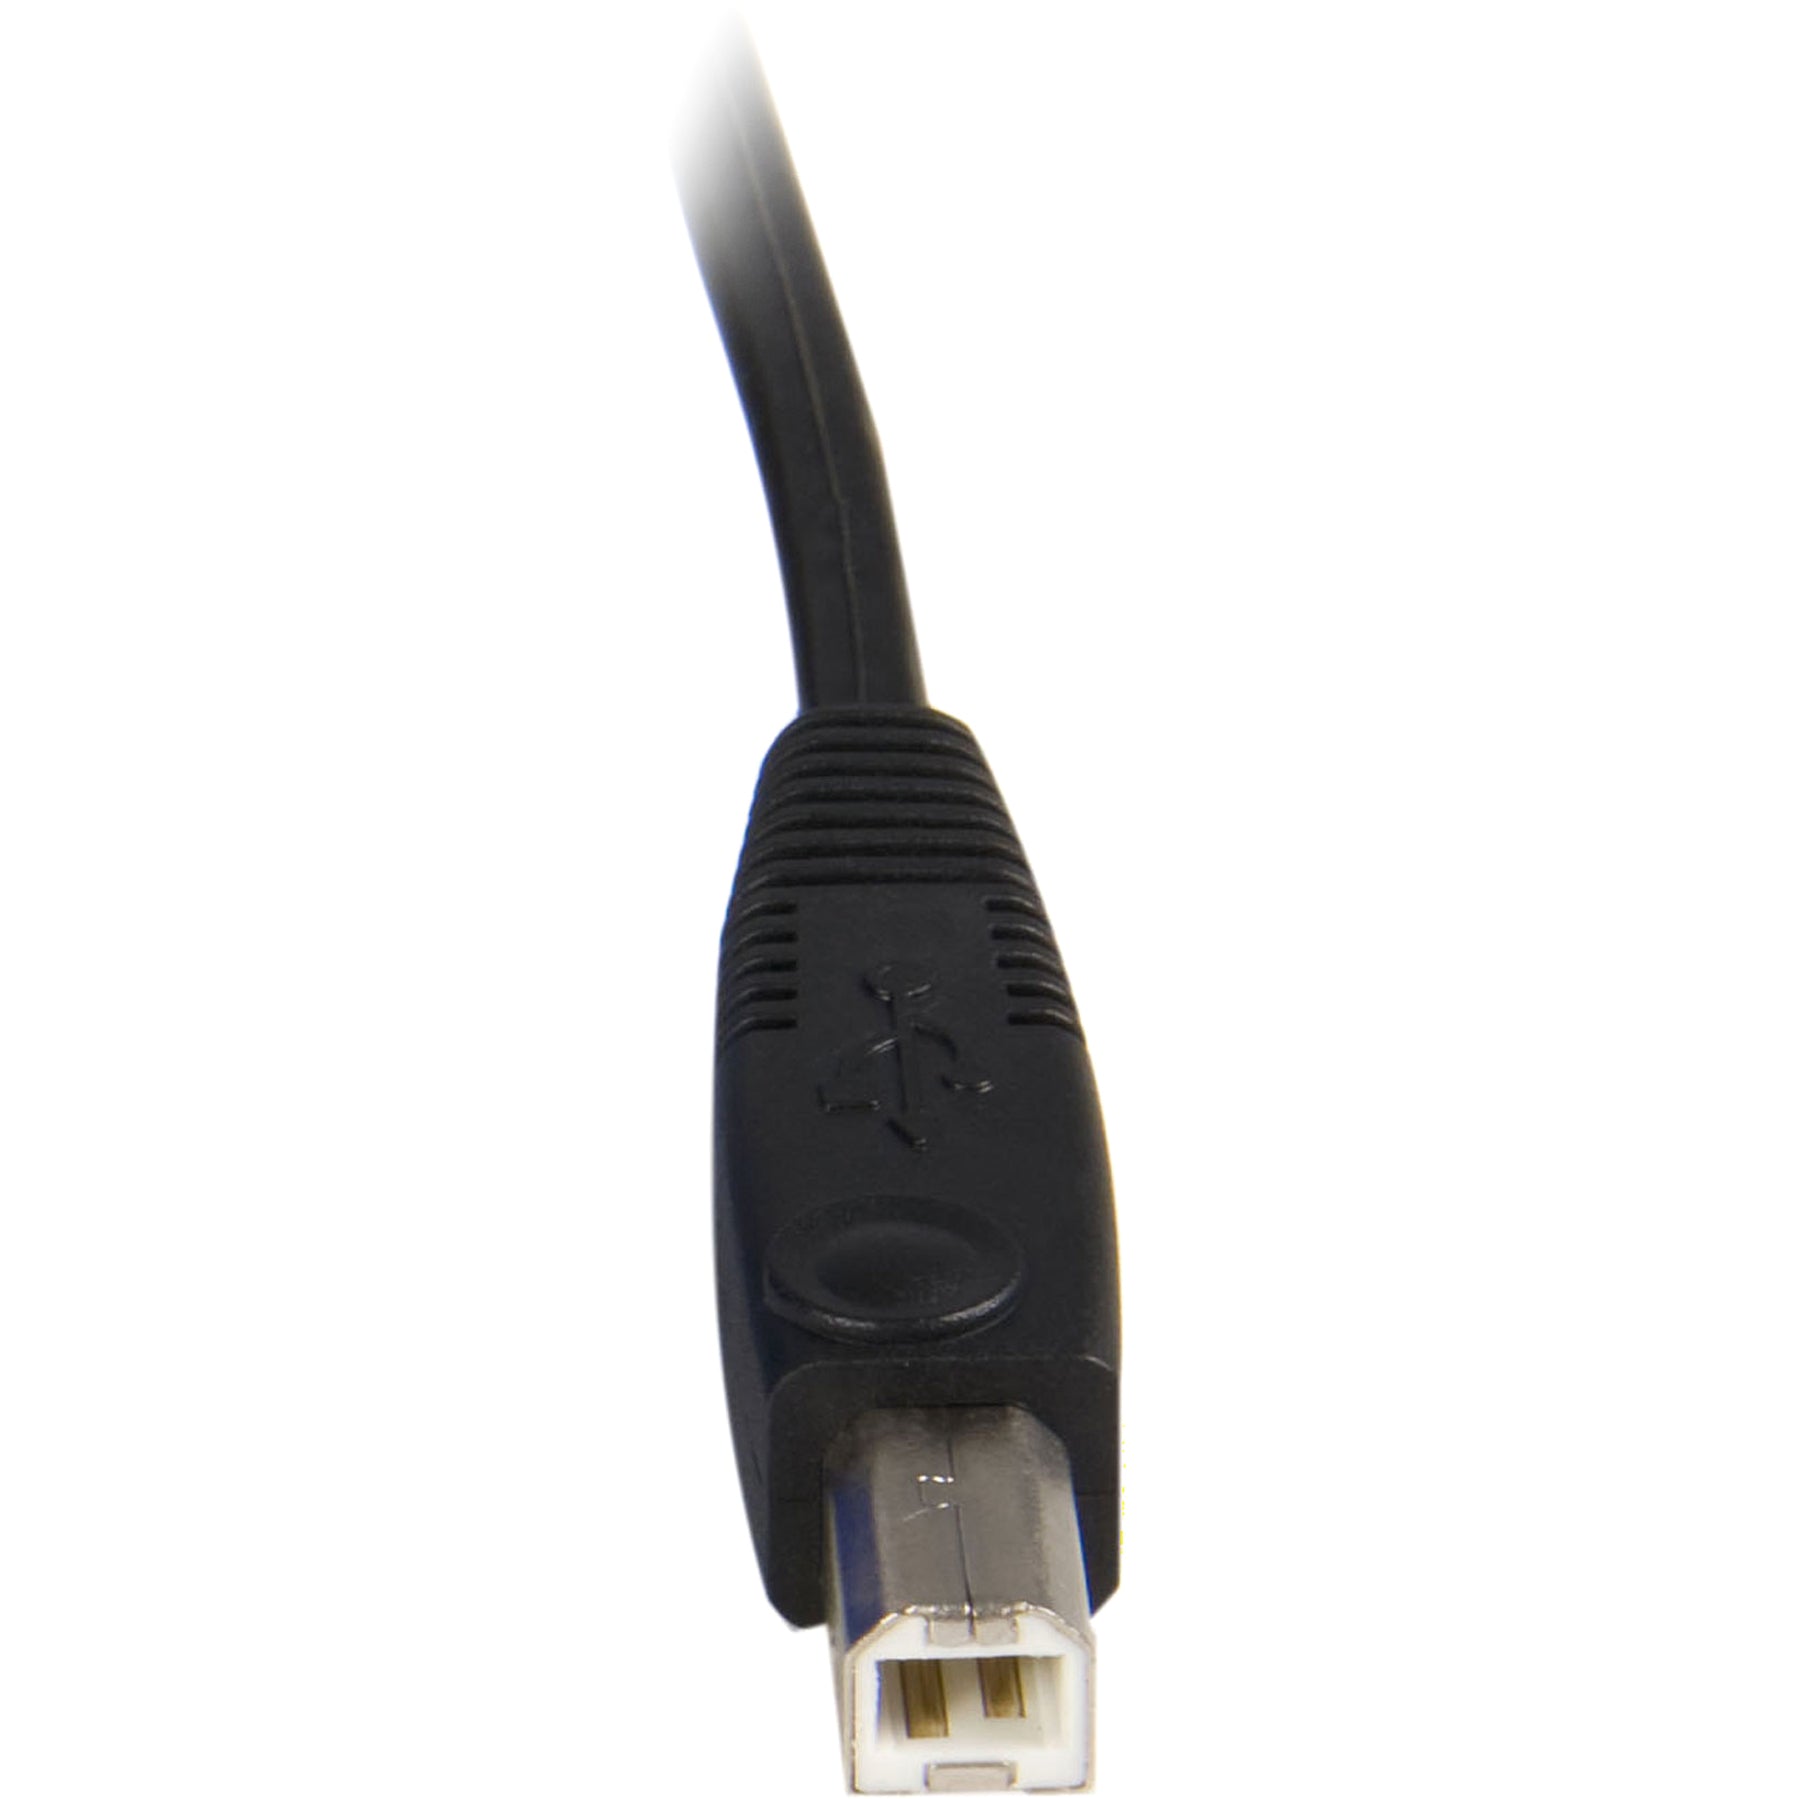 StarTech.com SVUSB2N16 USB KVM Cable, 6 ft, Tangle Resistant, Copper Conductor, Black